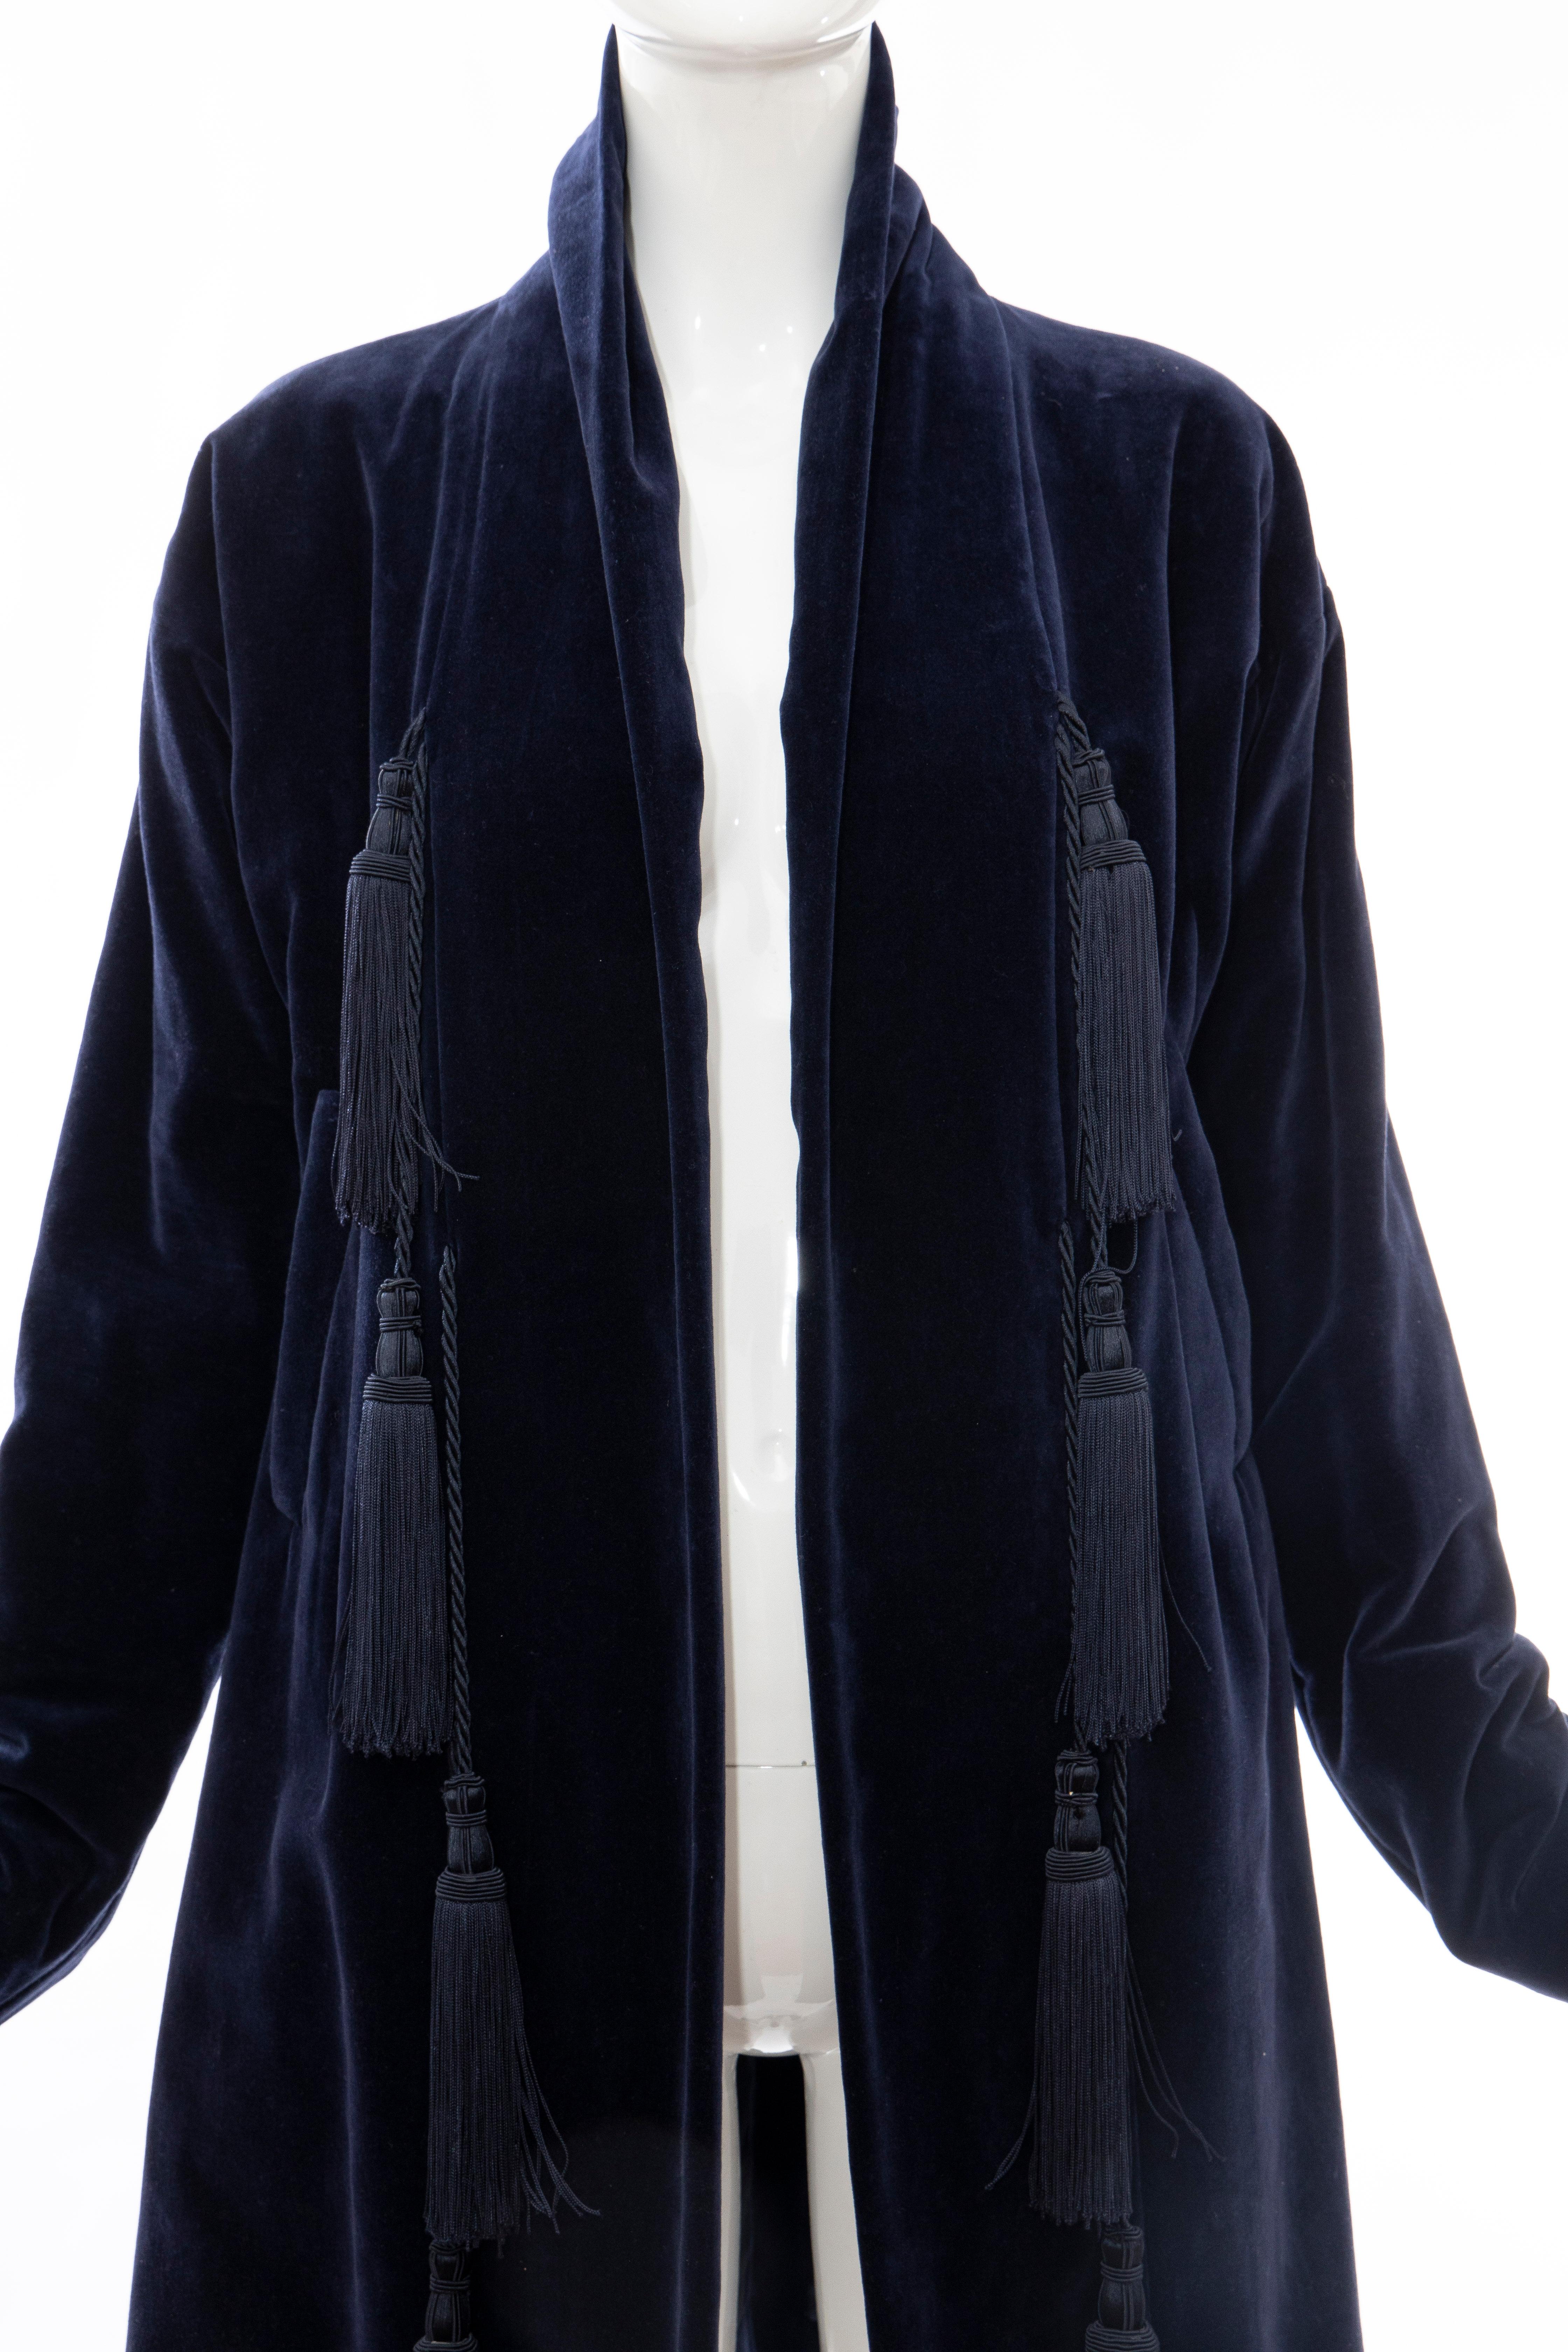 Romeo Gigli Navy Blue Cotton Velvet Appliquéd Tassels Kimono Jacket, Fall 1994 In Excellent Condition For Sale In Cincinnati, OH